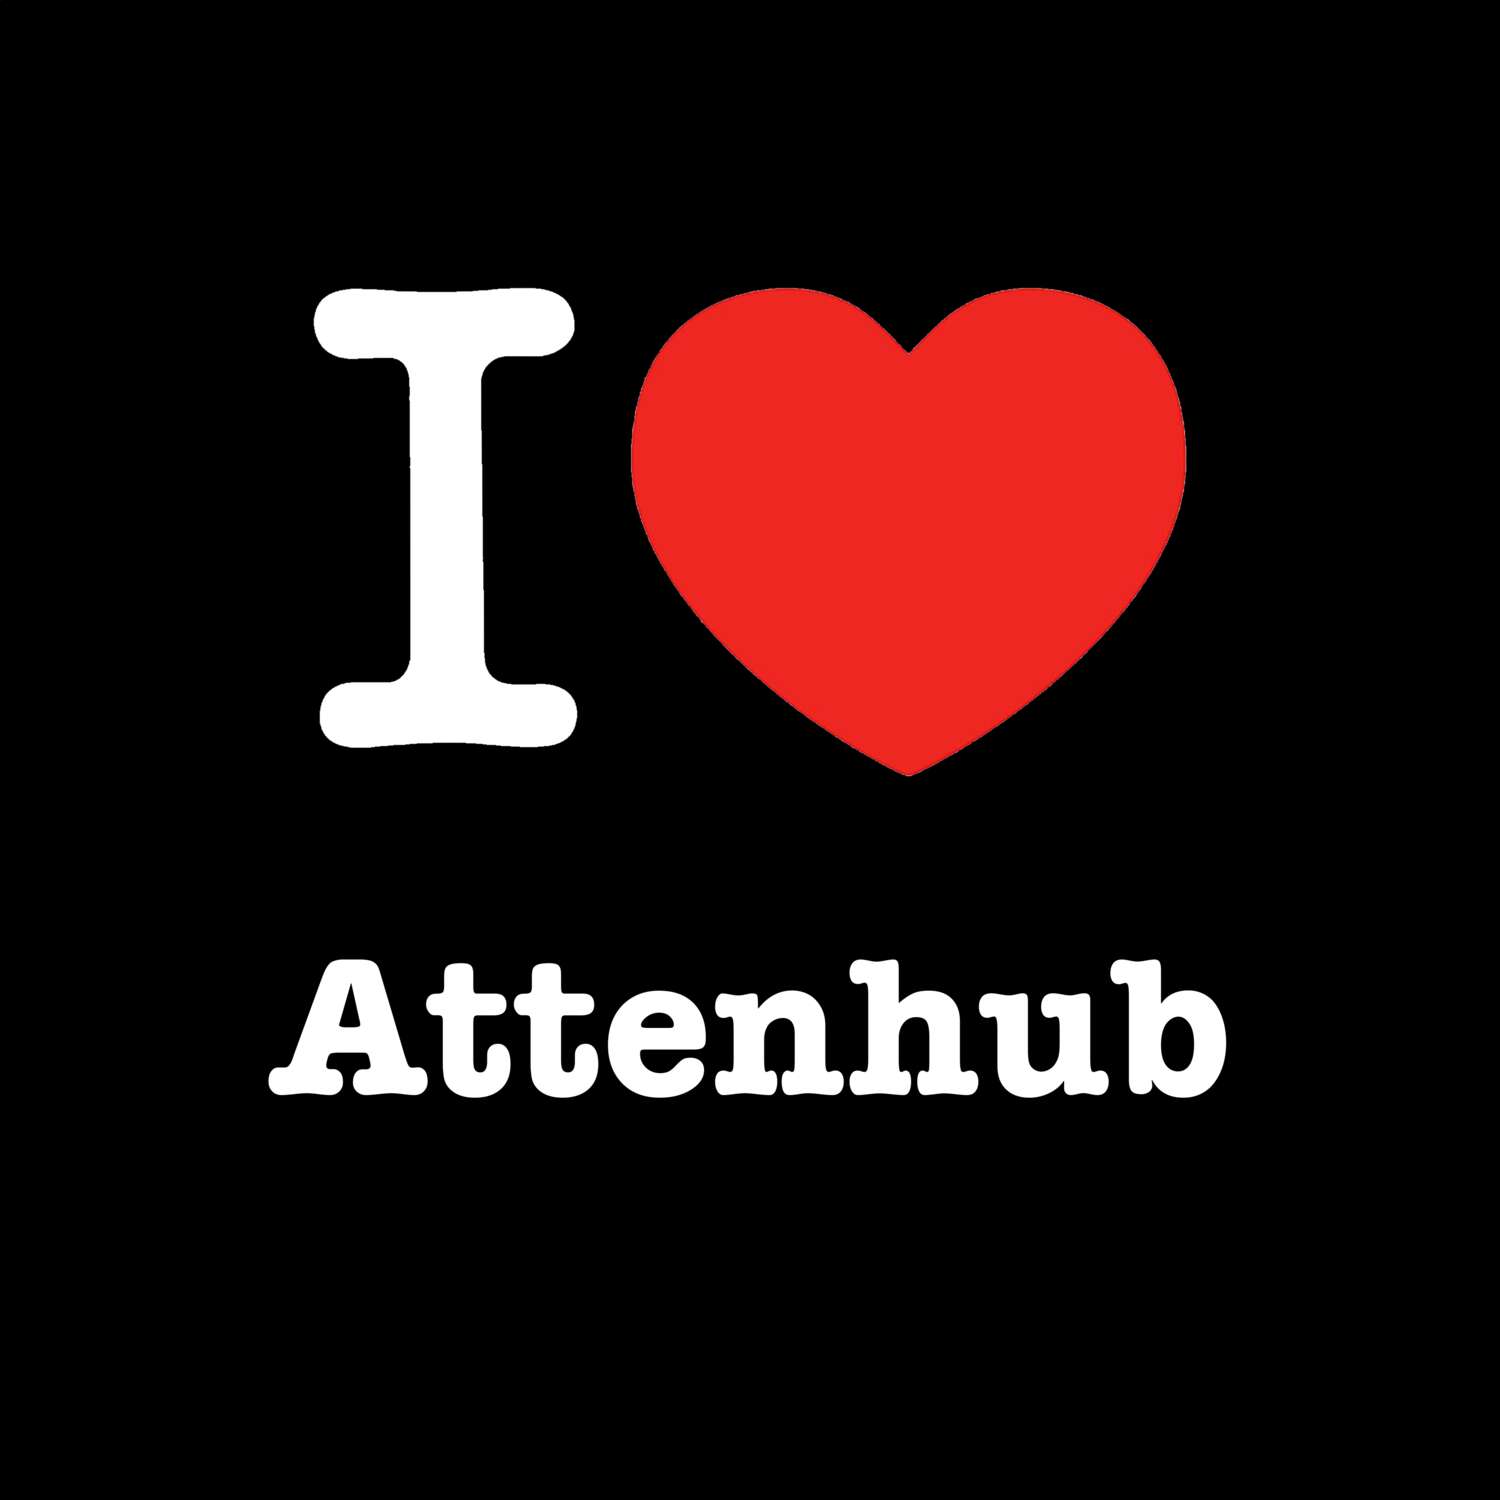 Attenhub T-Shirt »I love«